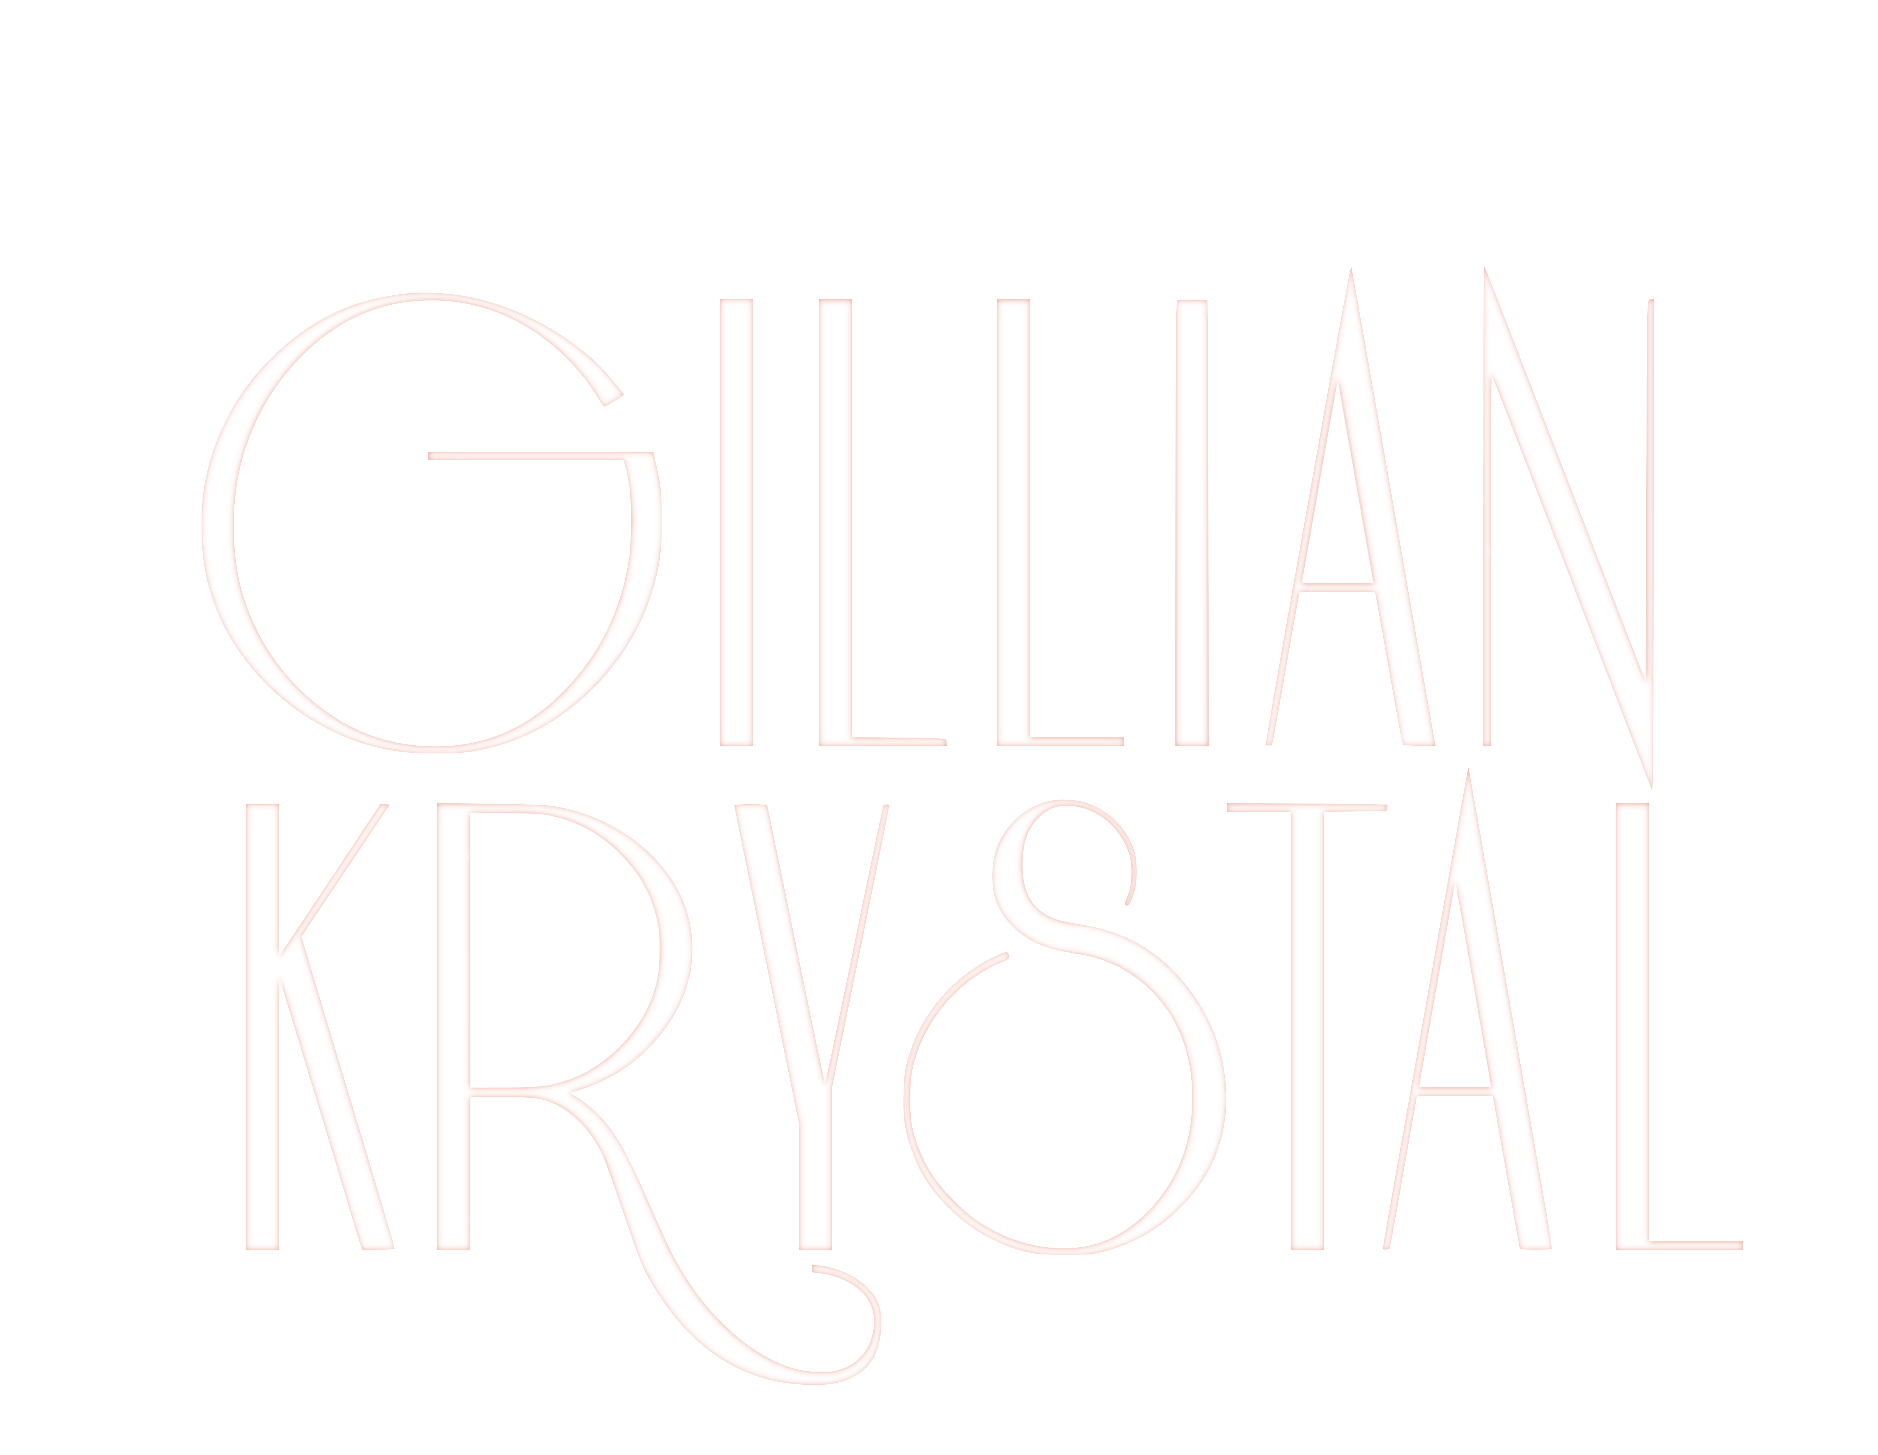 Gillian Krystal